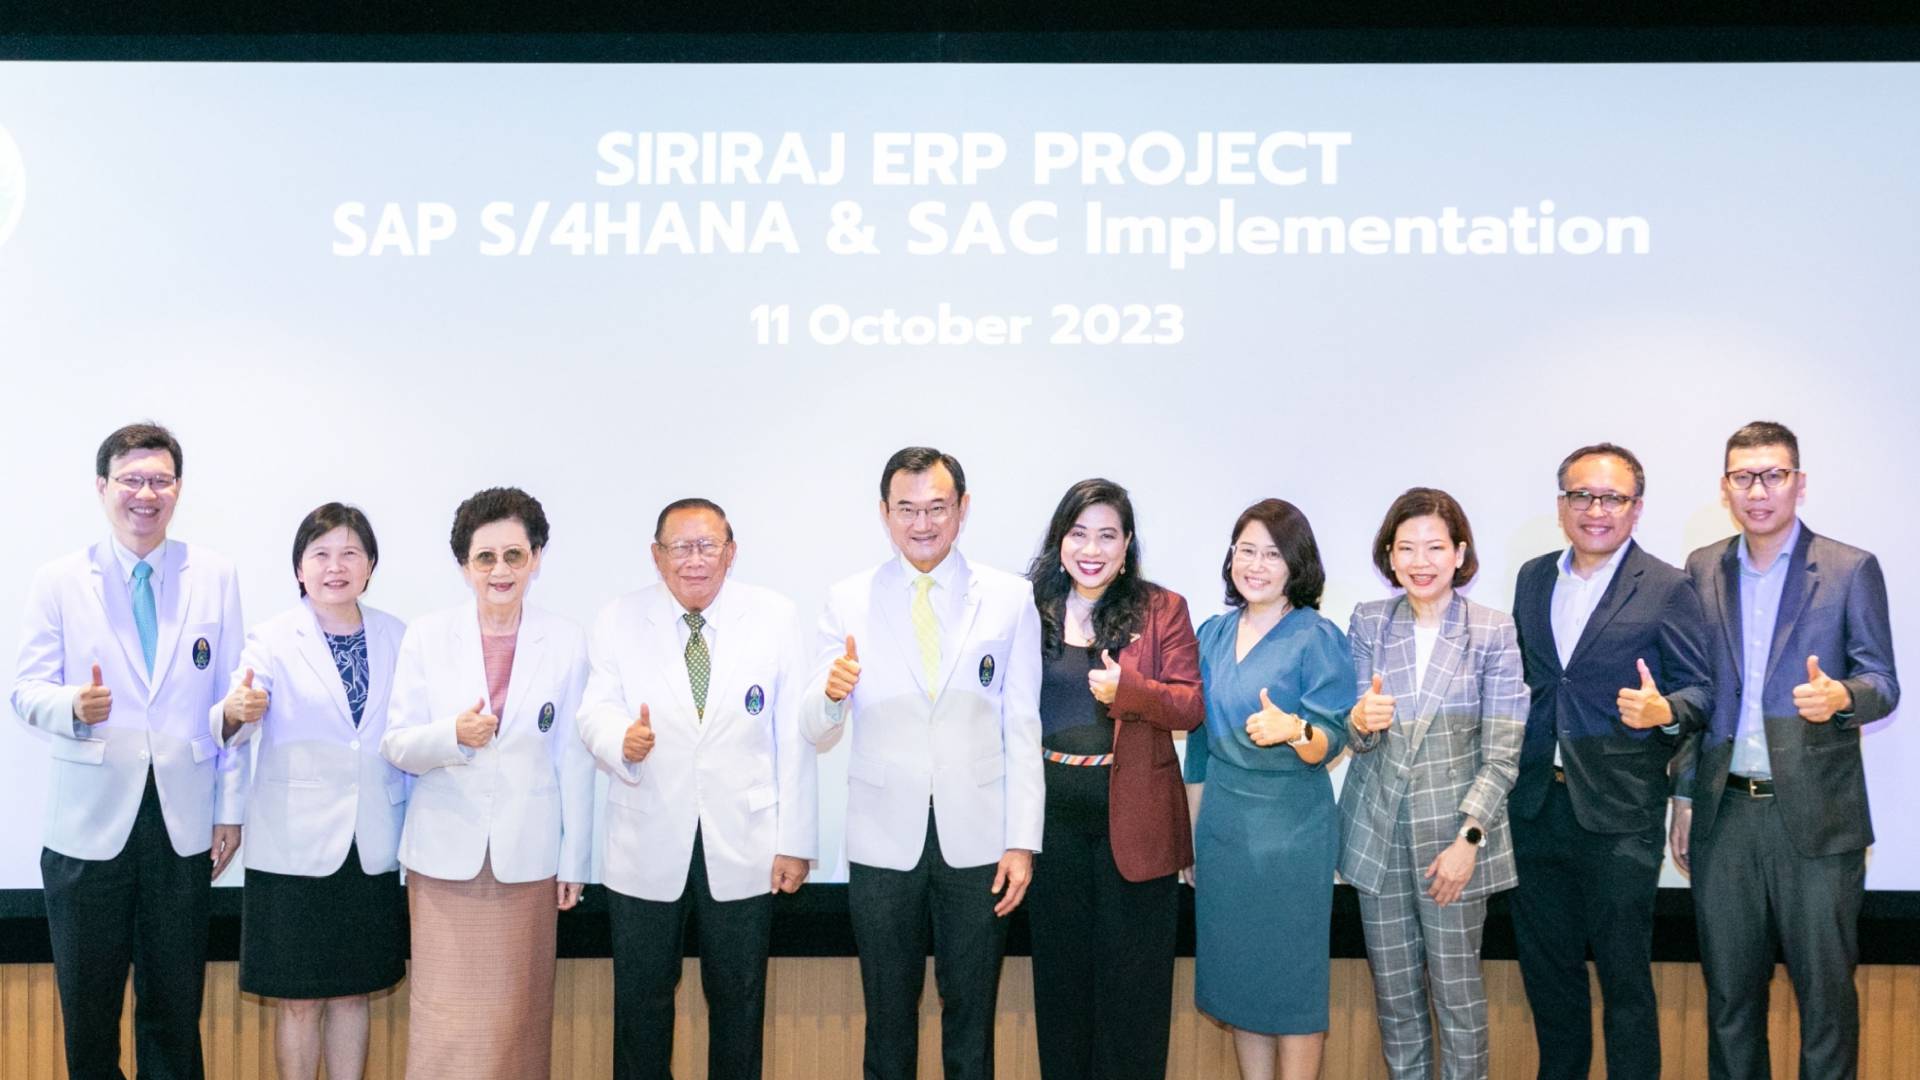 Siriraj launched the Siriraj ERP Project (SAP S/4 HANA & SAC Implementation)